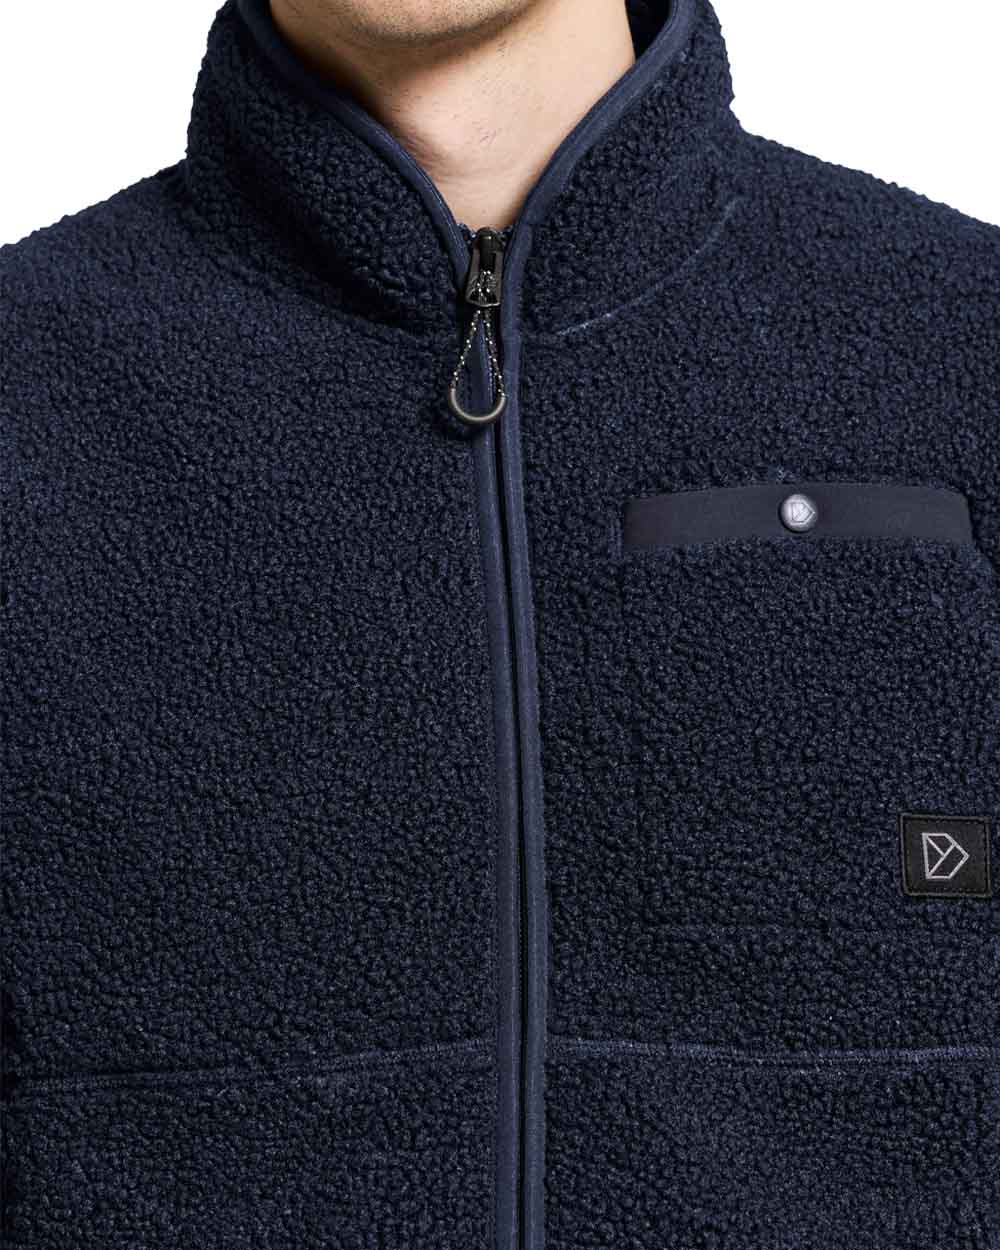 Dark Night Blue coloured Didriksons Full-Zip Jacket on White background 